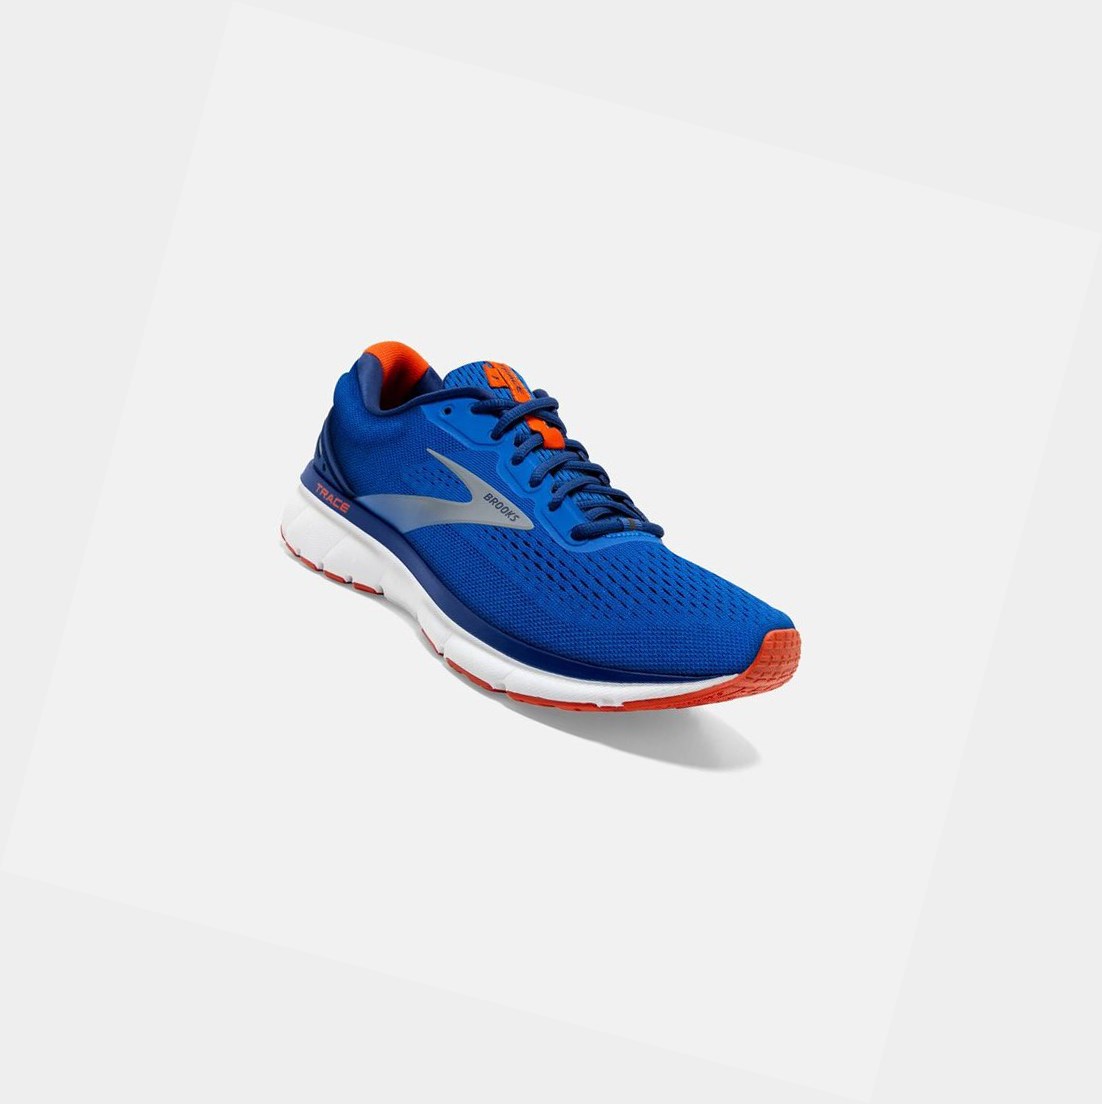 Brooks Trace Men's Road Running Shoes Blue / Navy / Orange | YEWF-82761